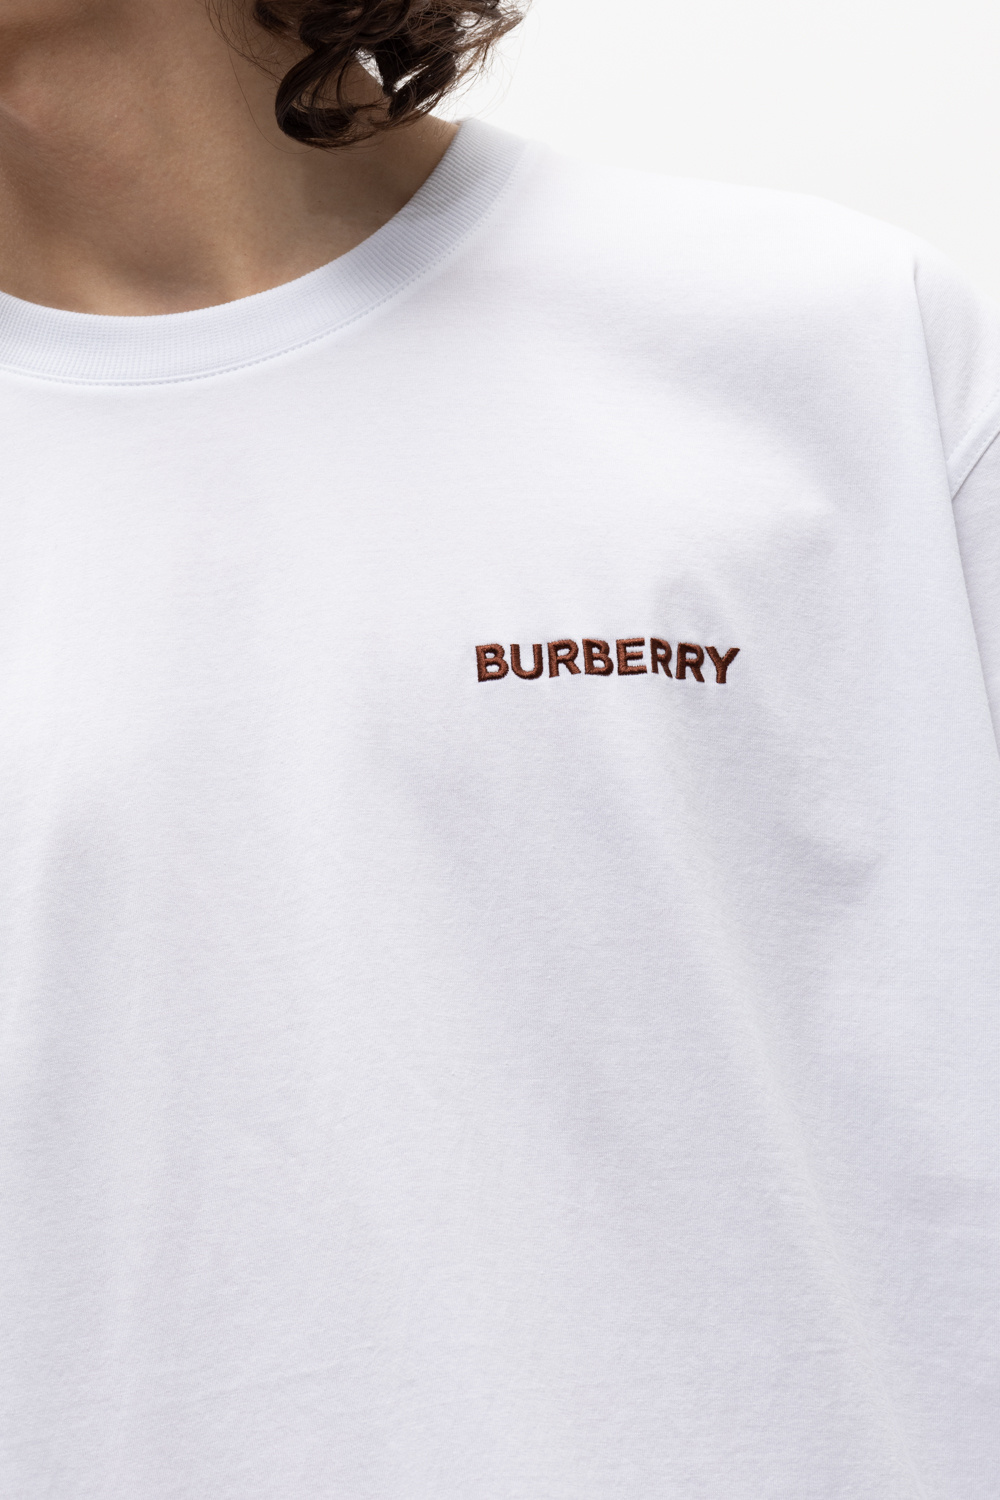 burberry Internation ‘Magna’ T-shirt